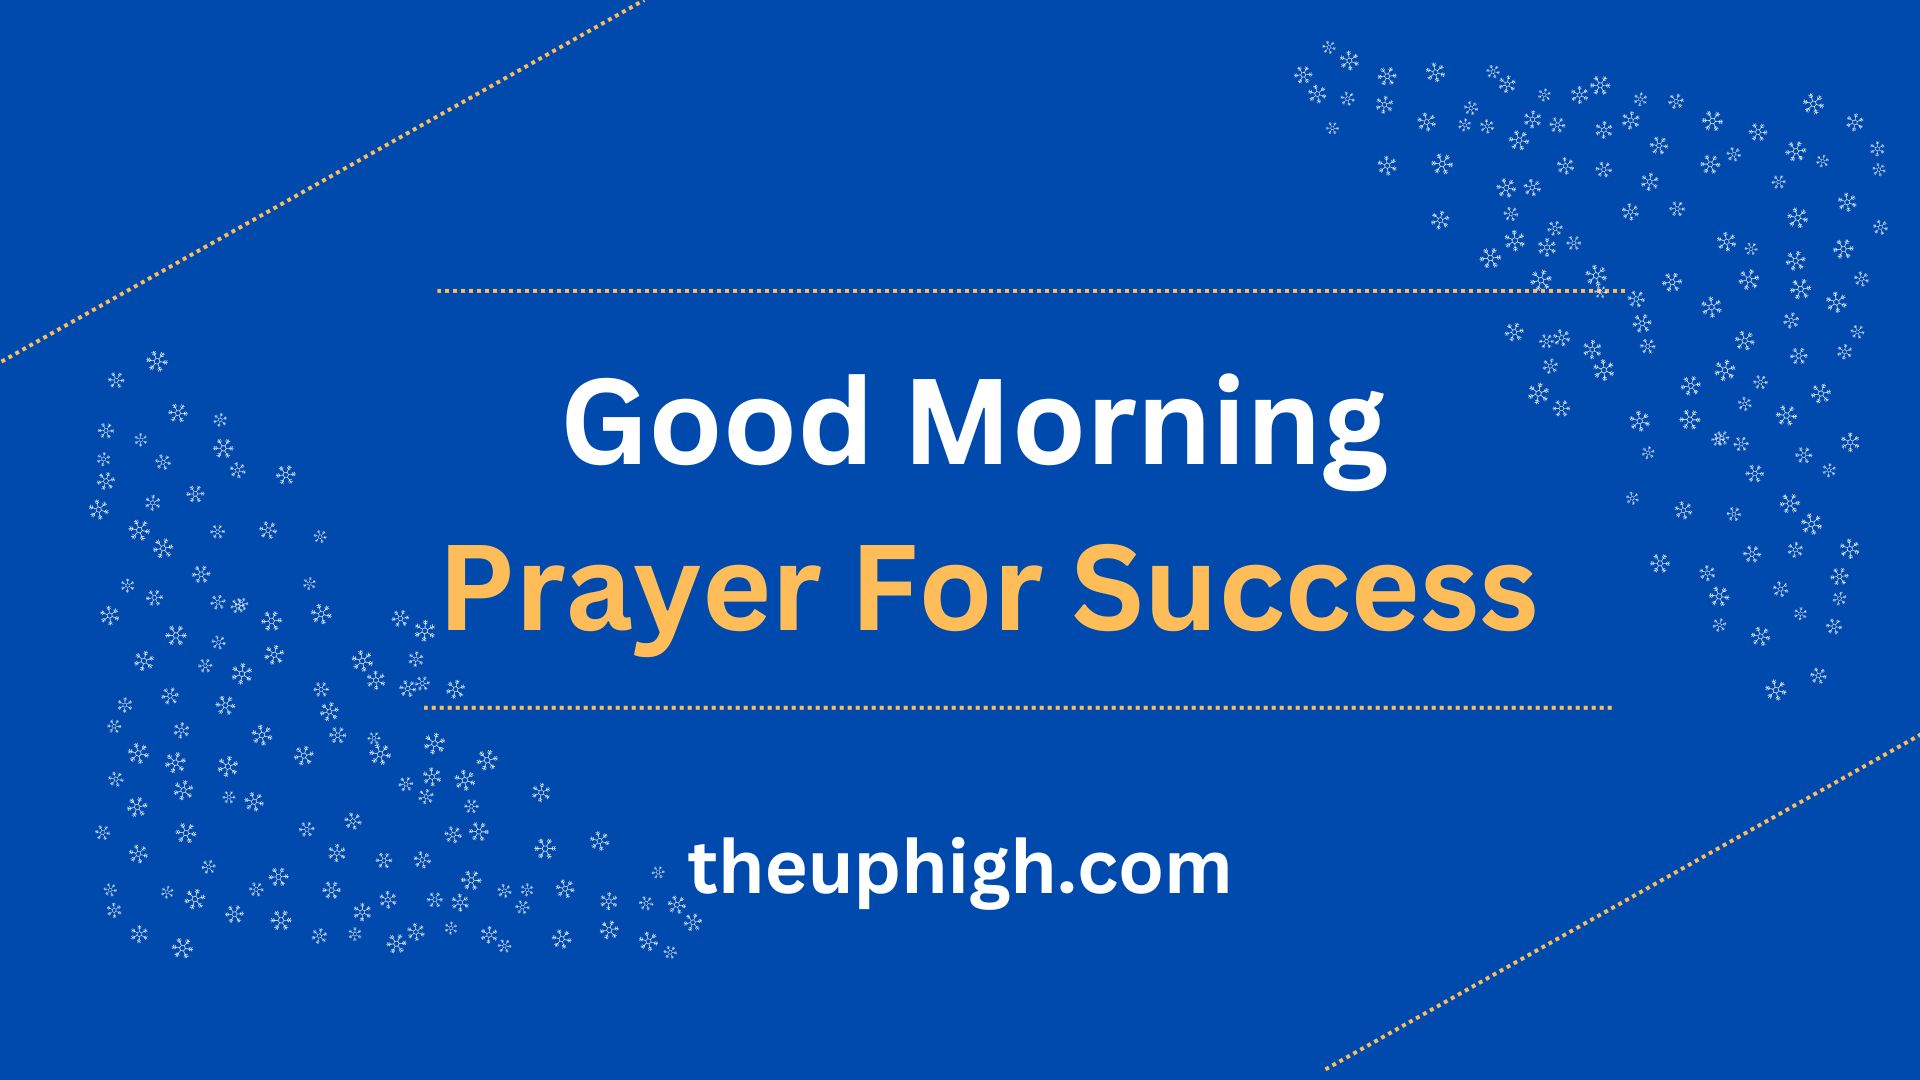 Good Morning Prayer For Success